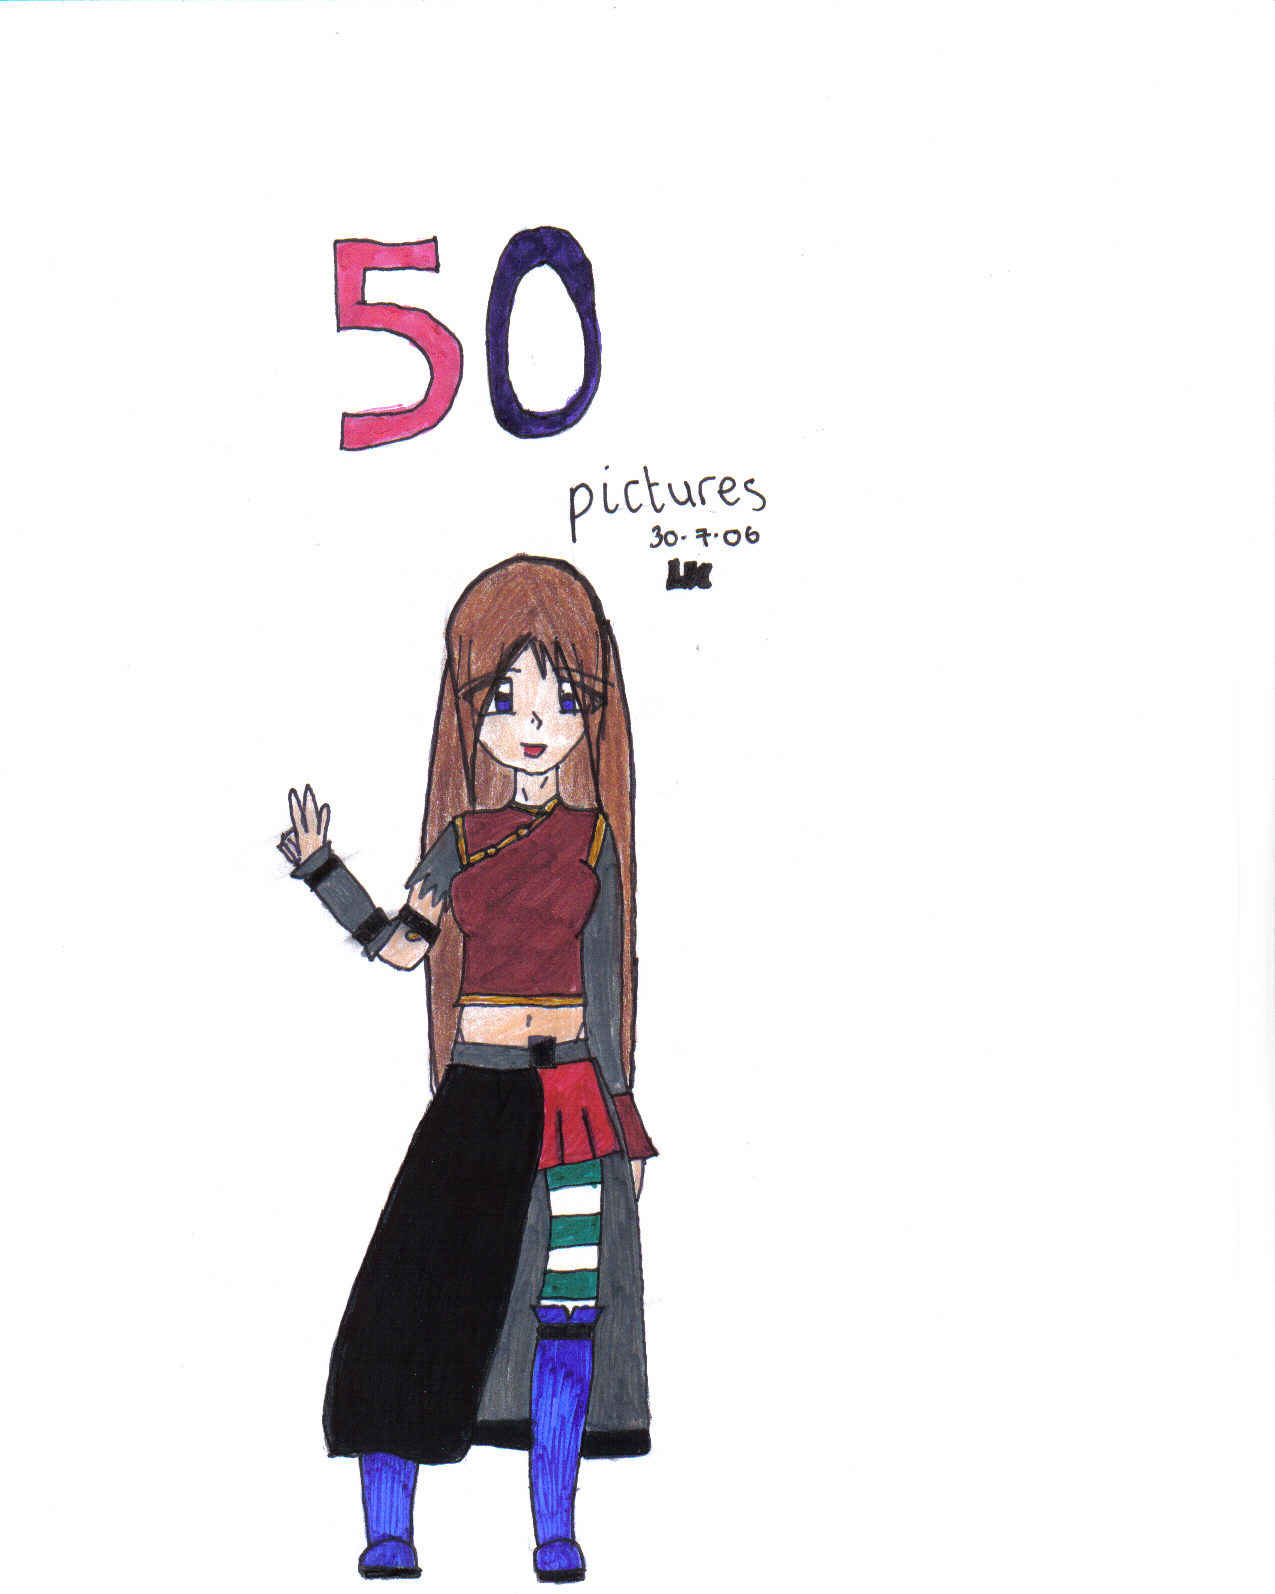 Finally 50 Pictures! YAY! by cyborg_katyuska